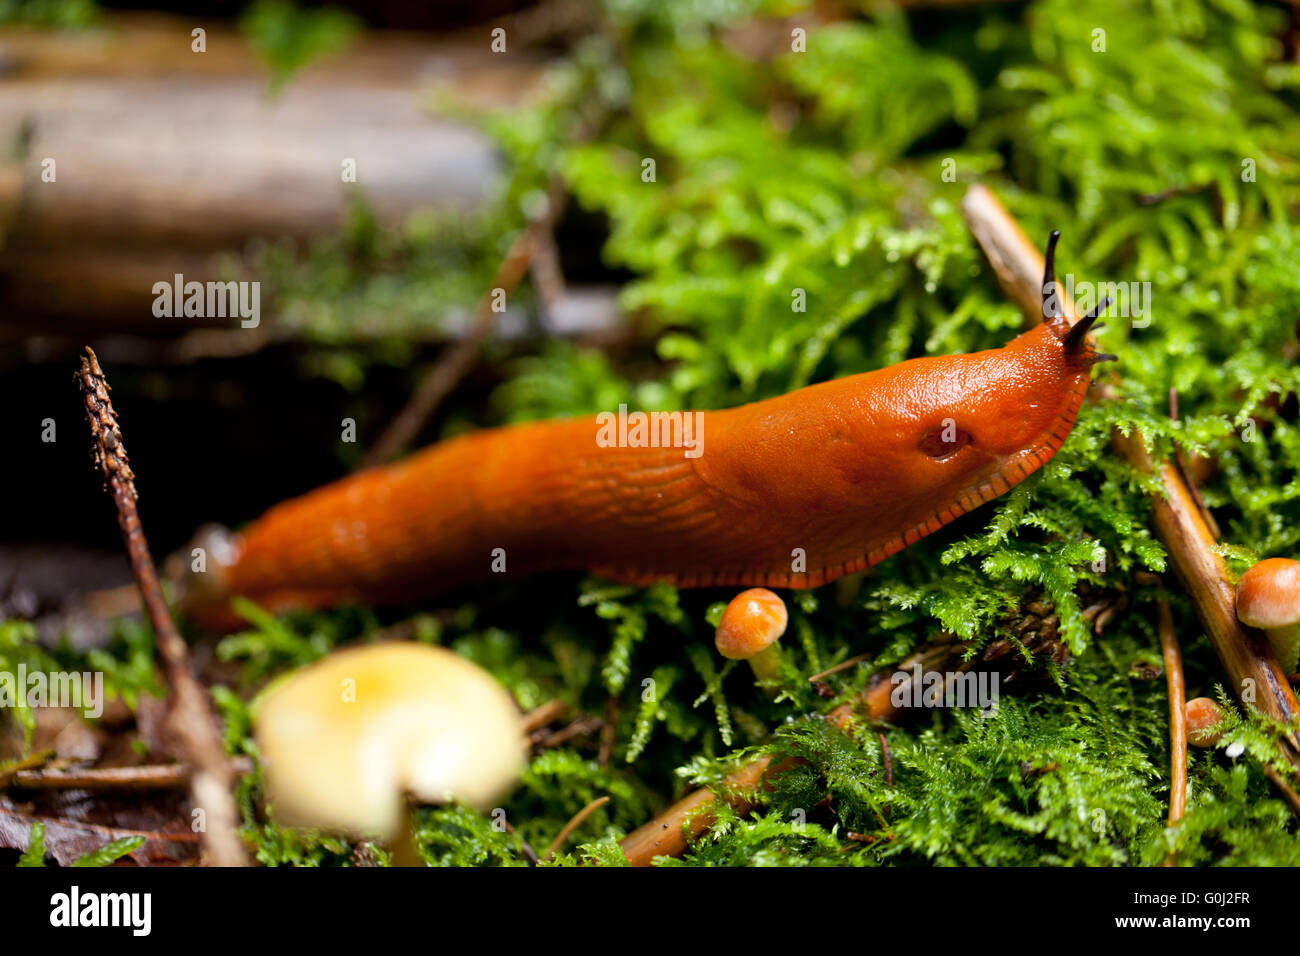 red slug arion rufus slimy nature slow green wild Stock Photo